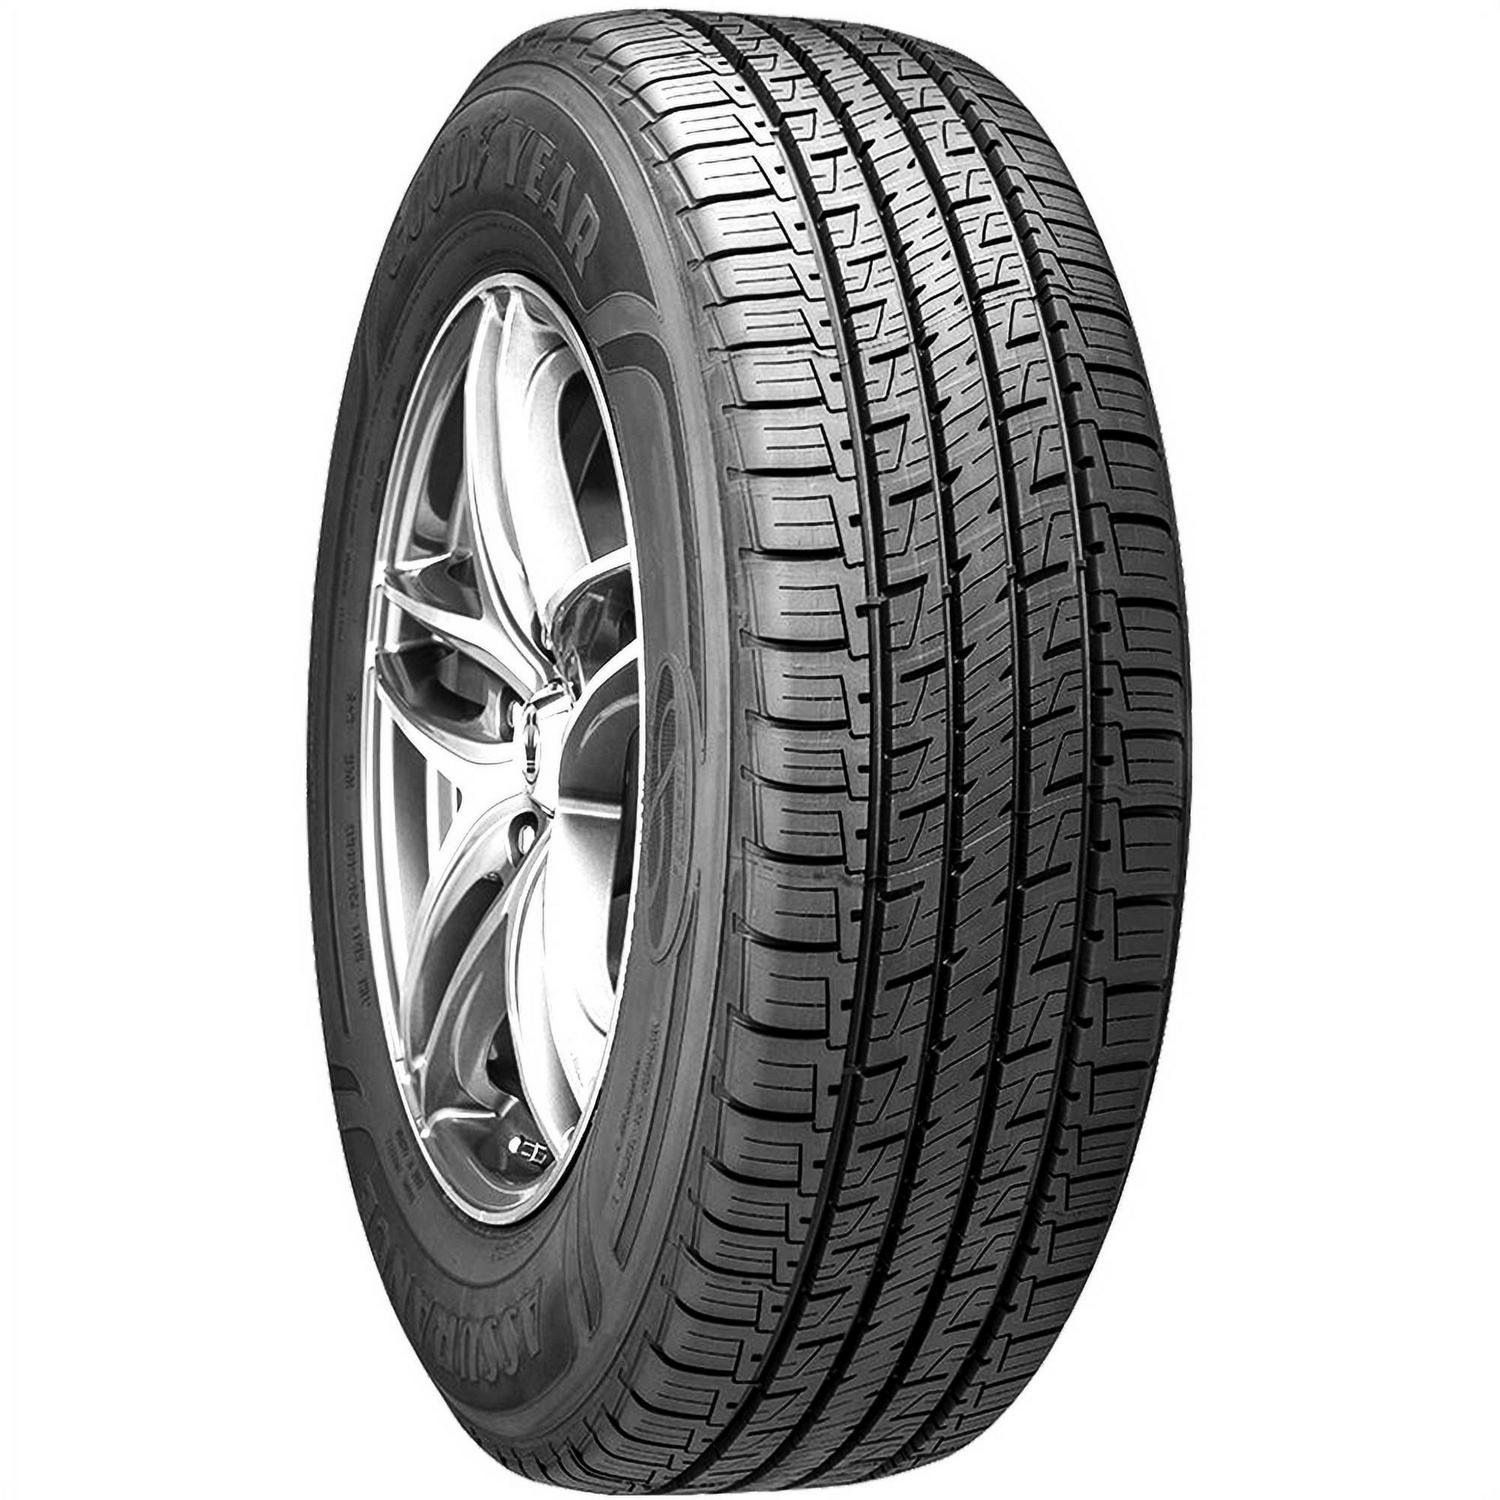 Goodyear Assurance MaxLife 205/50R17 89V A/S All Season Tire